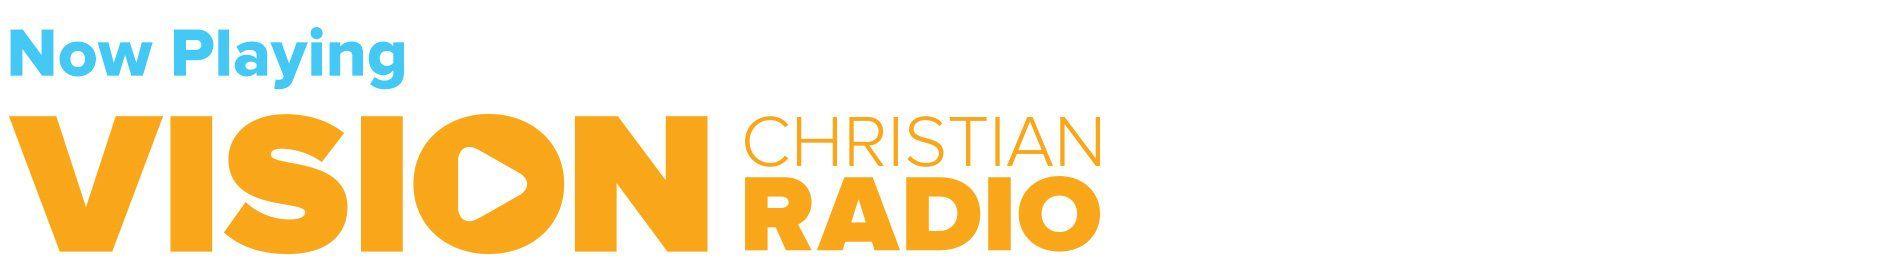 Christian Radio Logo - Vision Christian Radio